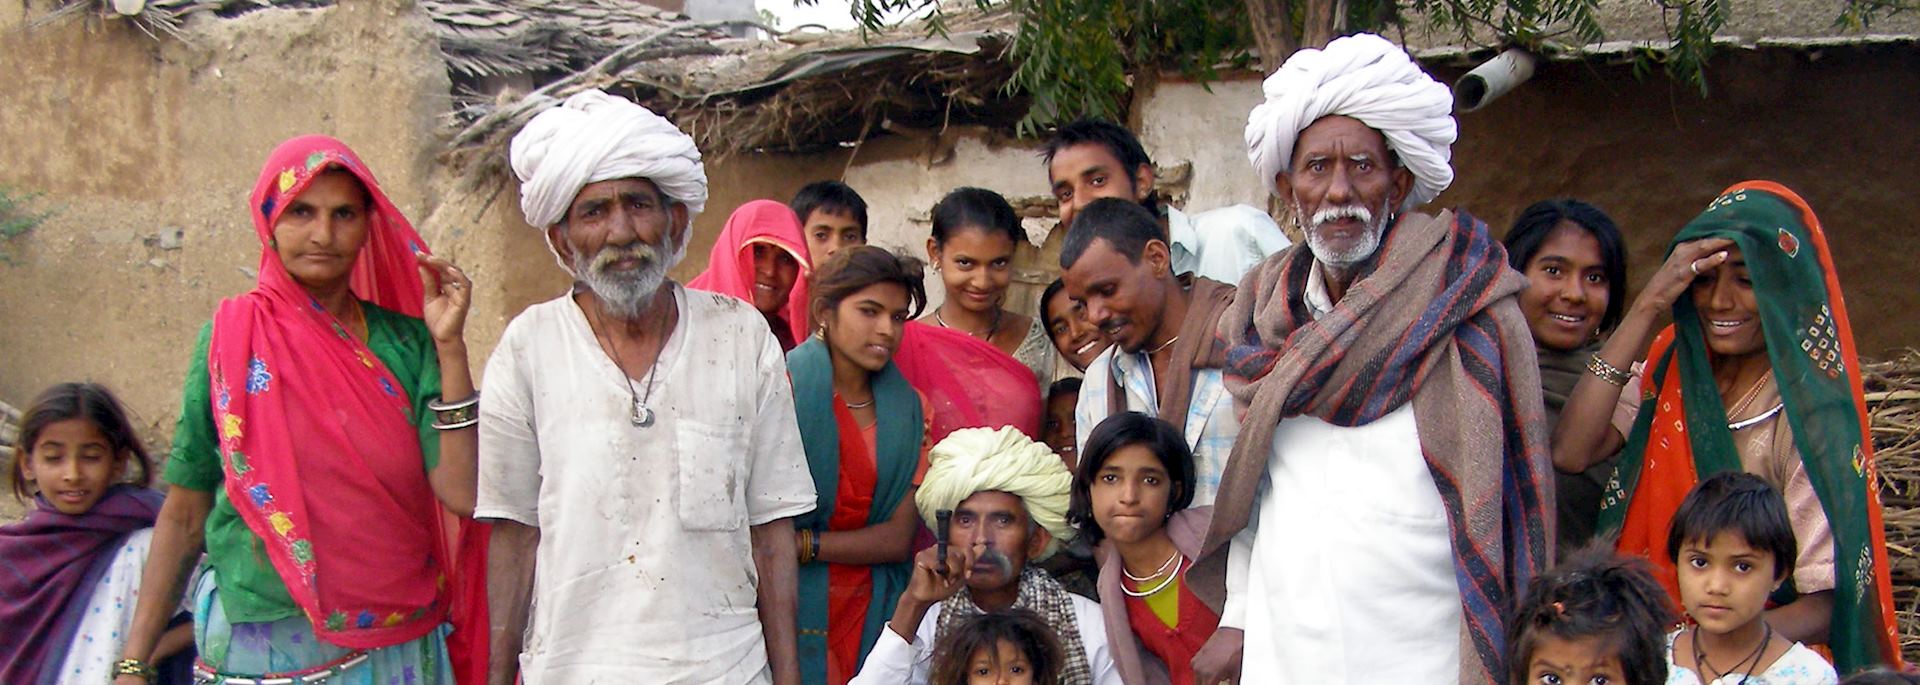 Villagers in Barli